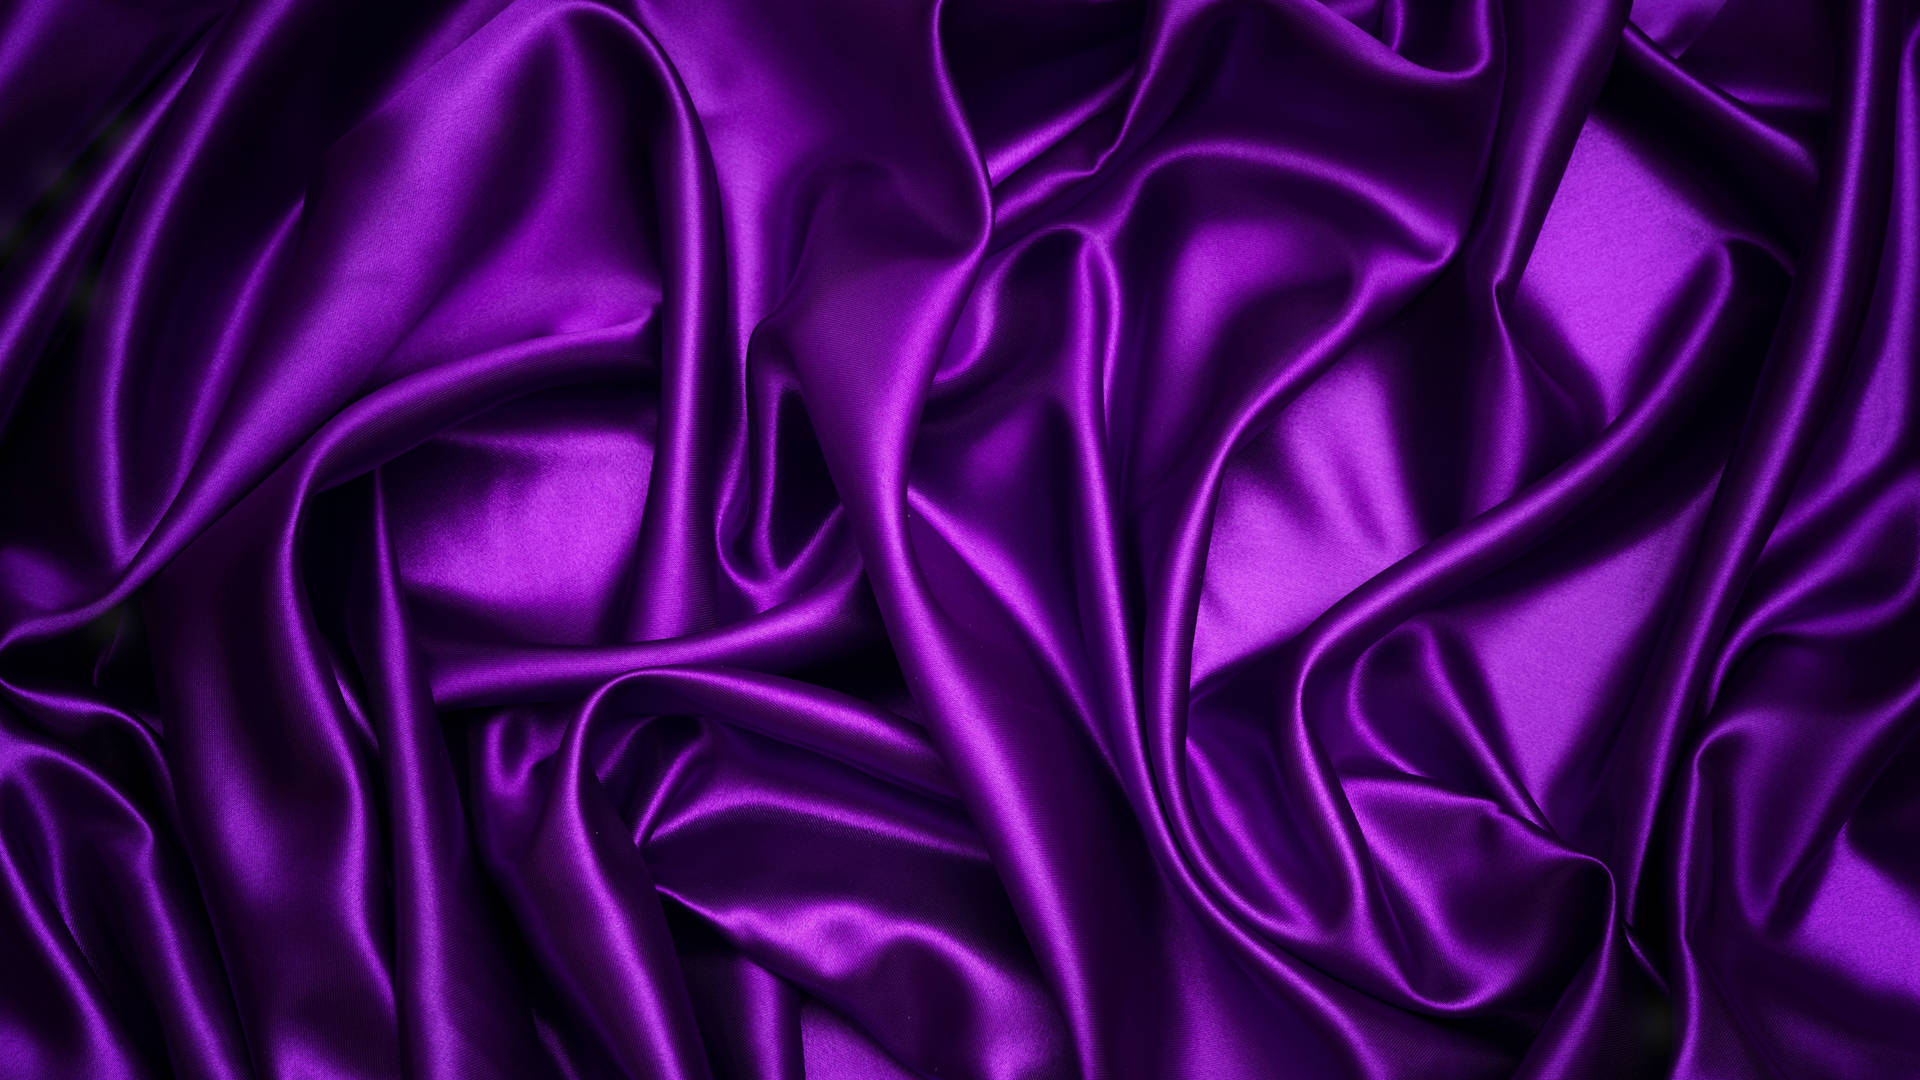 Deep Purple Silk Fabric Background